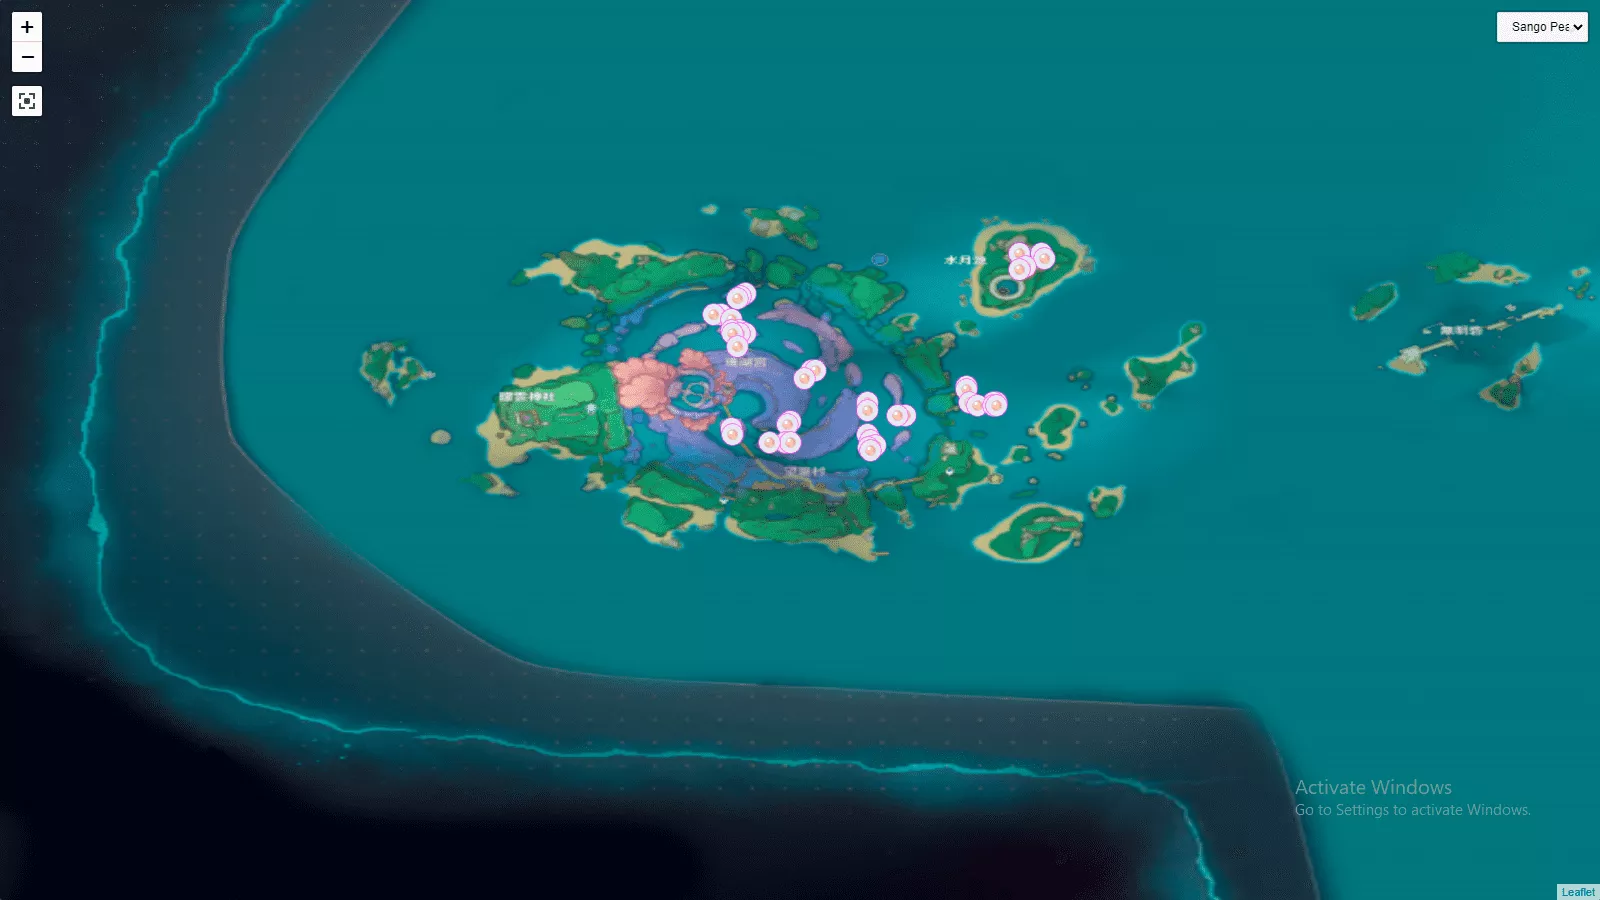 Genshin Impact Specialty : Sango Pearl Location Interactive Map - ziiliongamer